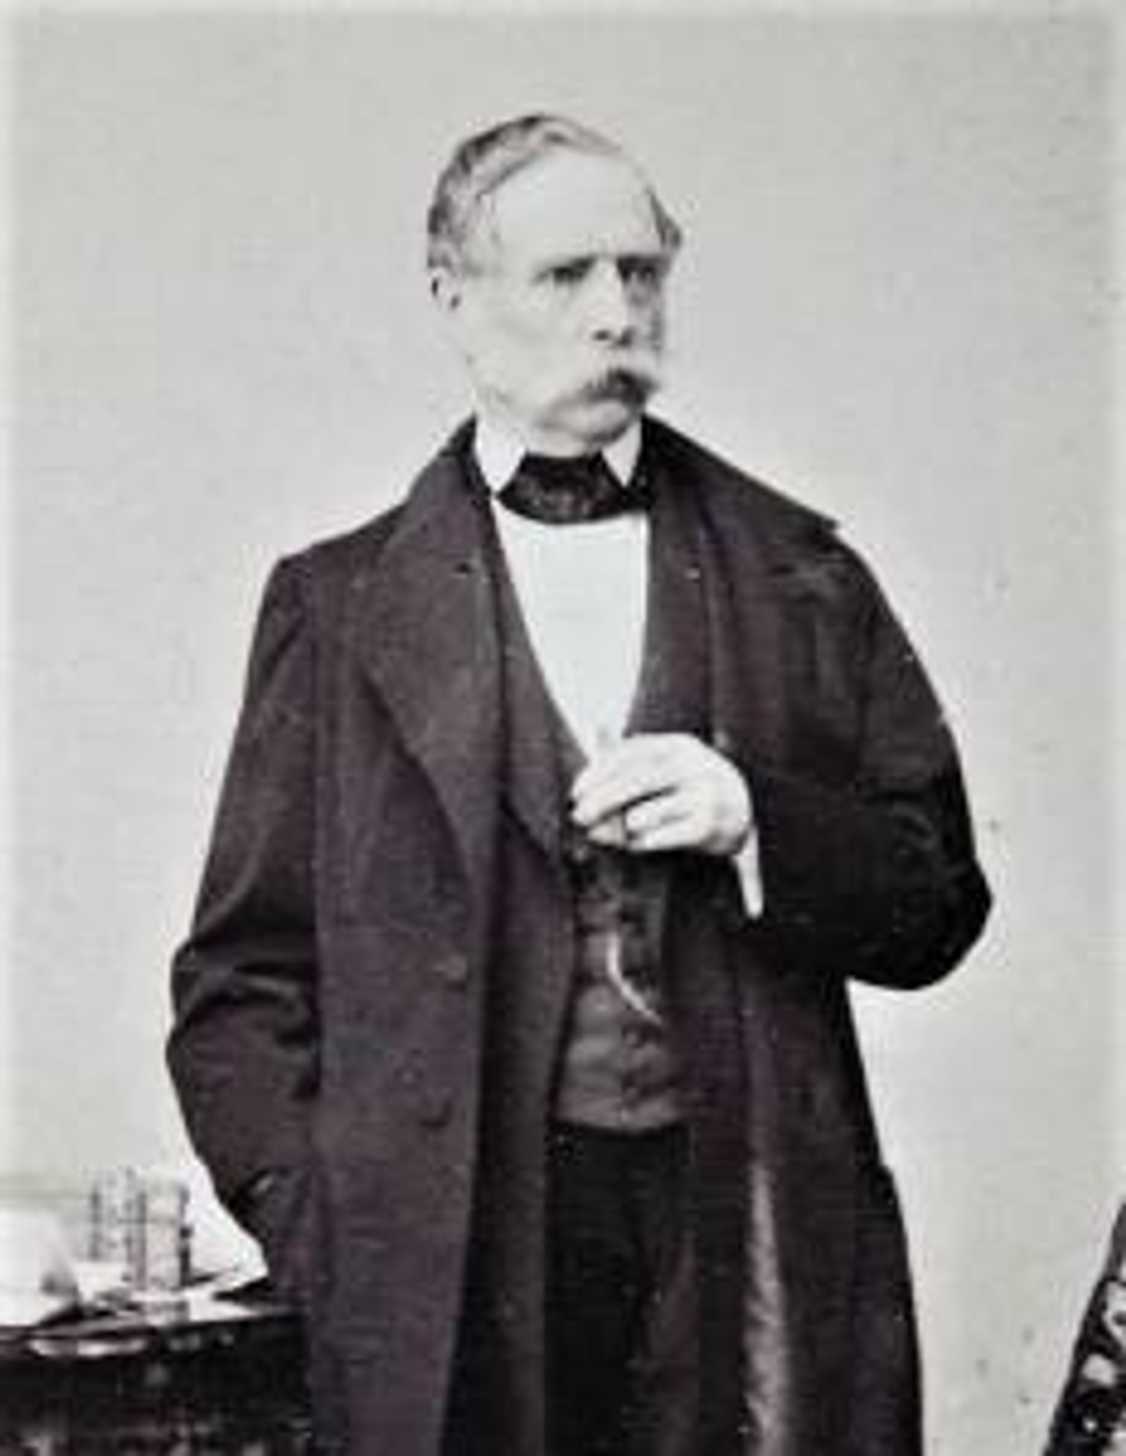 Hugo Karel Salm-Reifferscheidt-Raitz (1803–1888)
